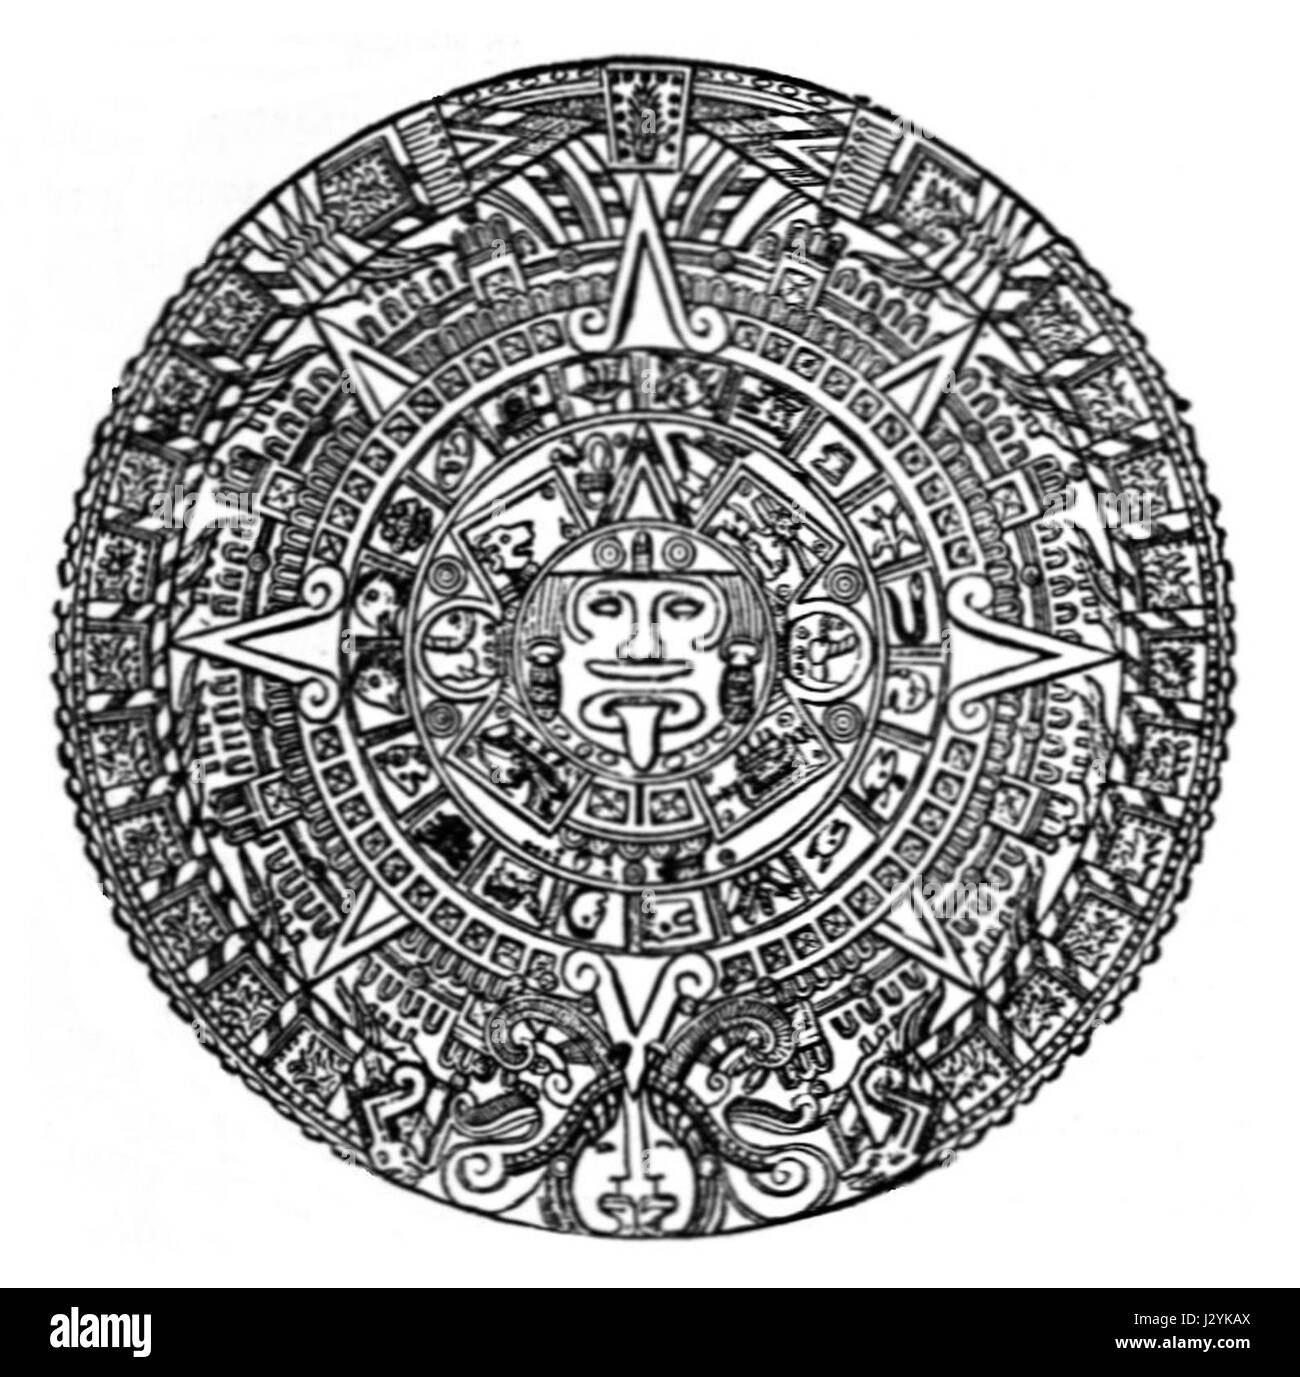 Aztec calendar Black and White Stock Photos & Images - Alamy